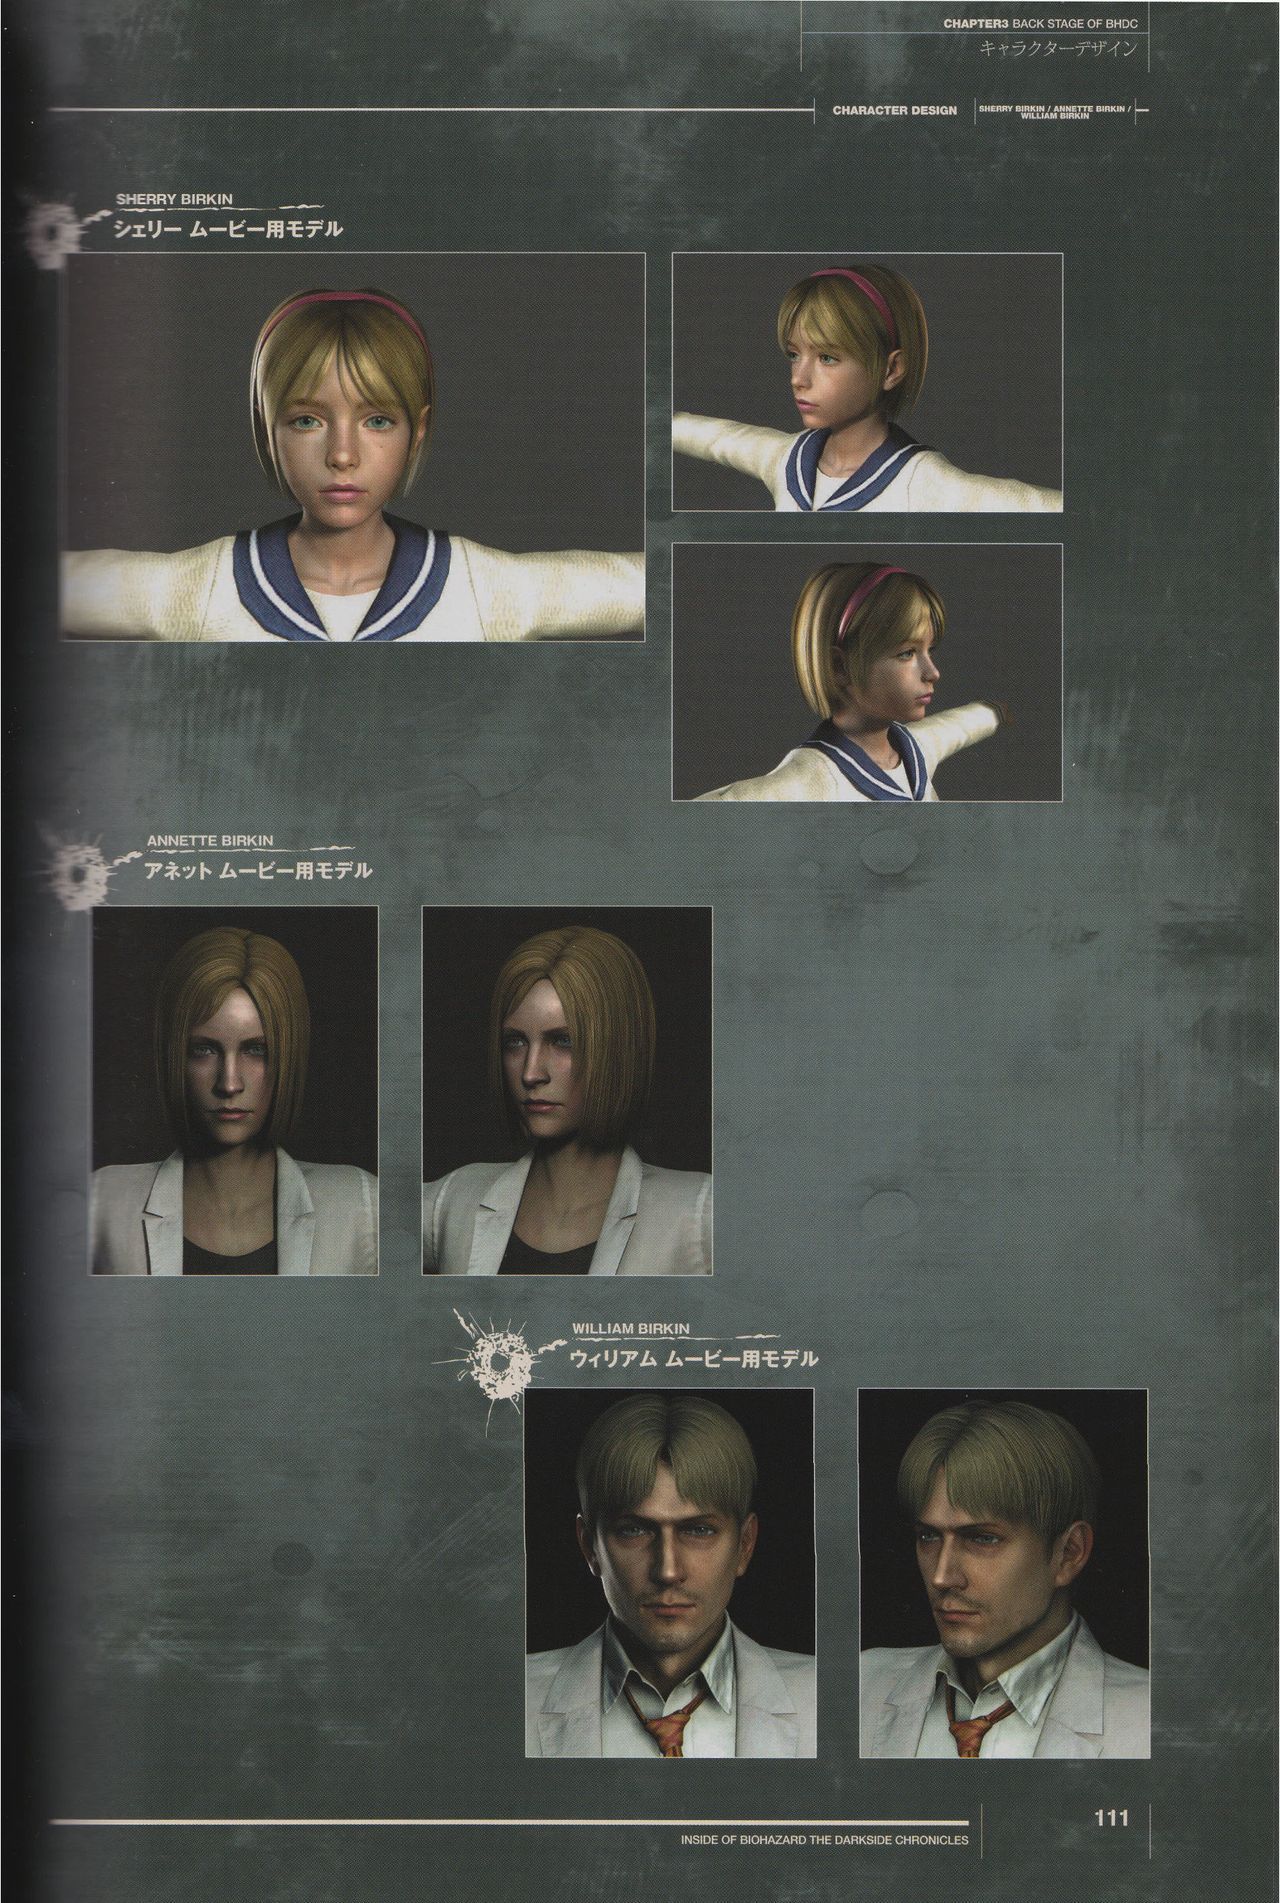 Resident Evil: The Darkside Chronicles Artbook 111